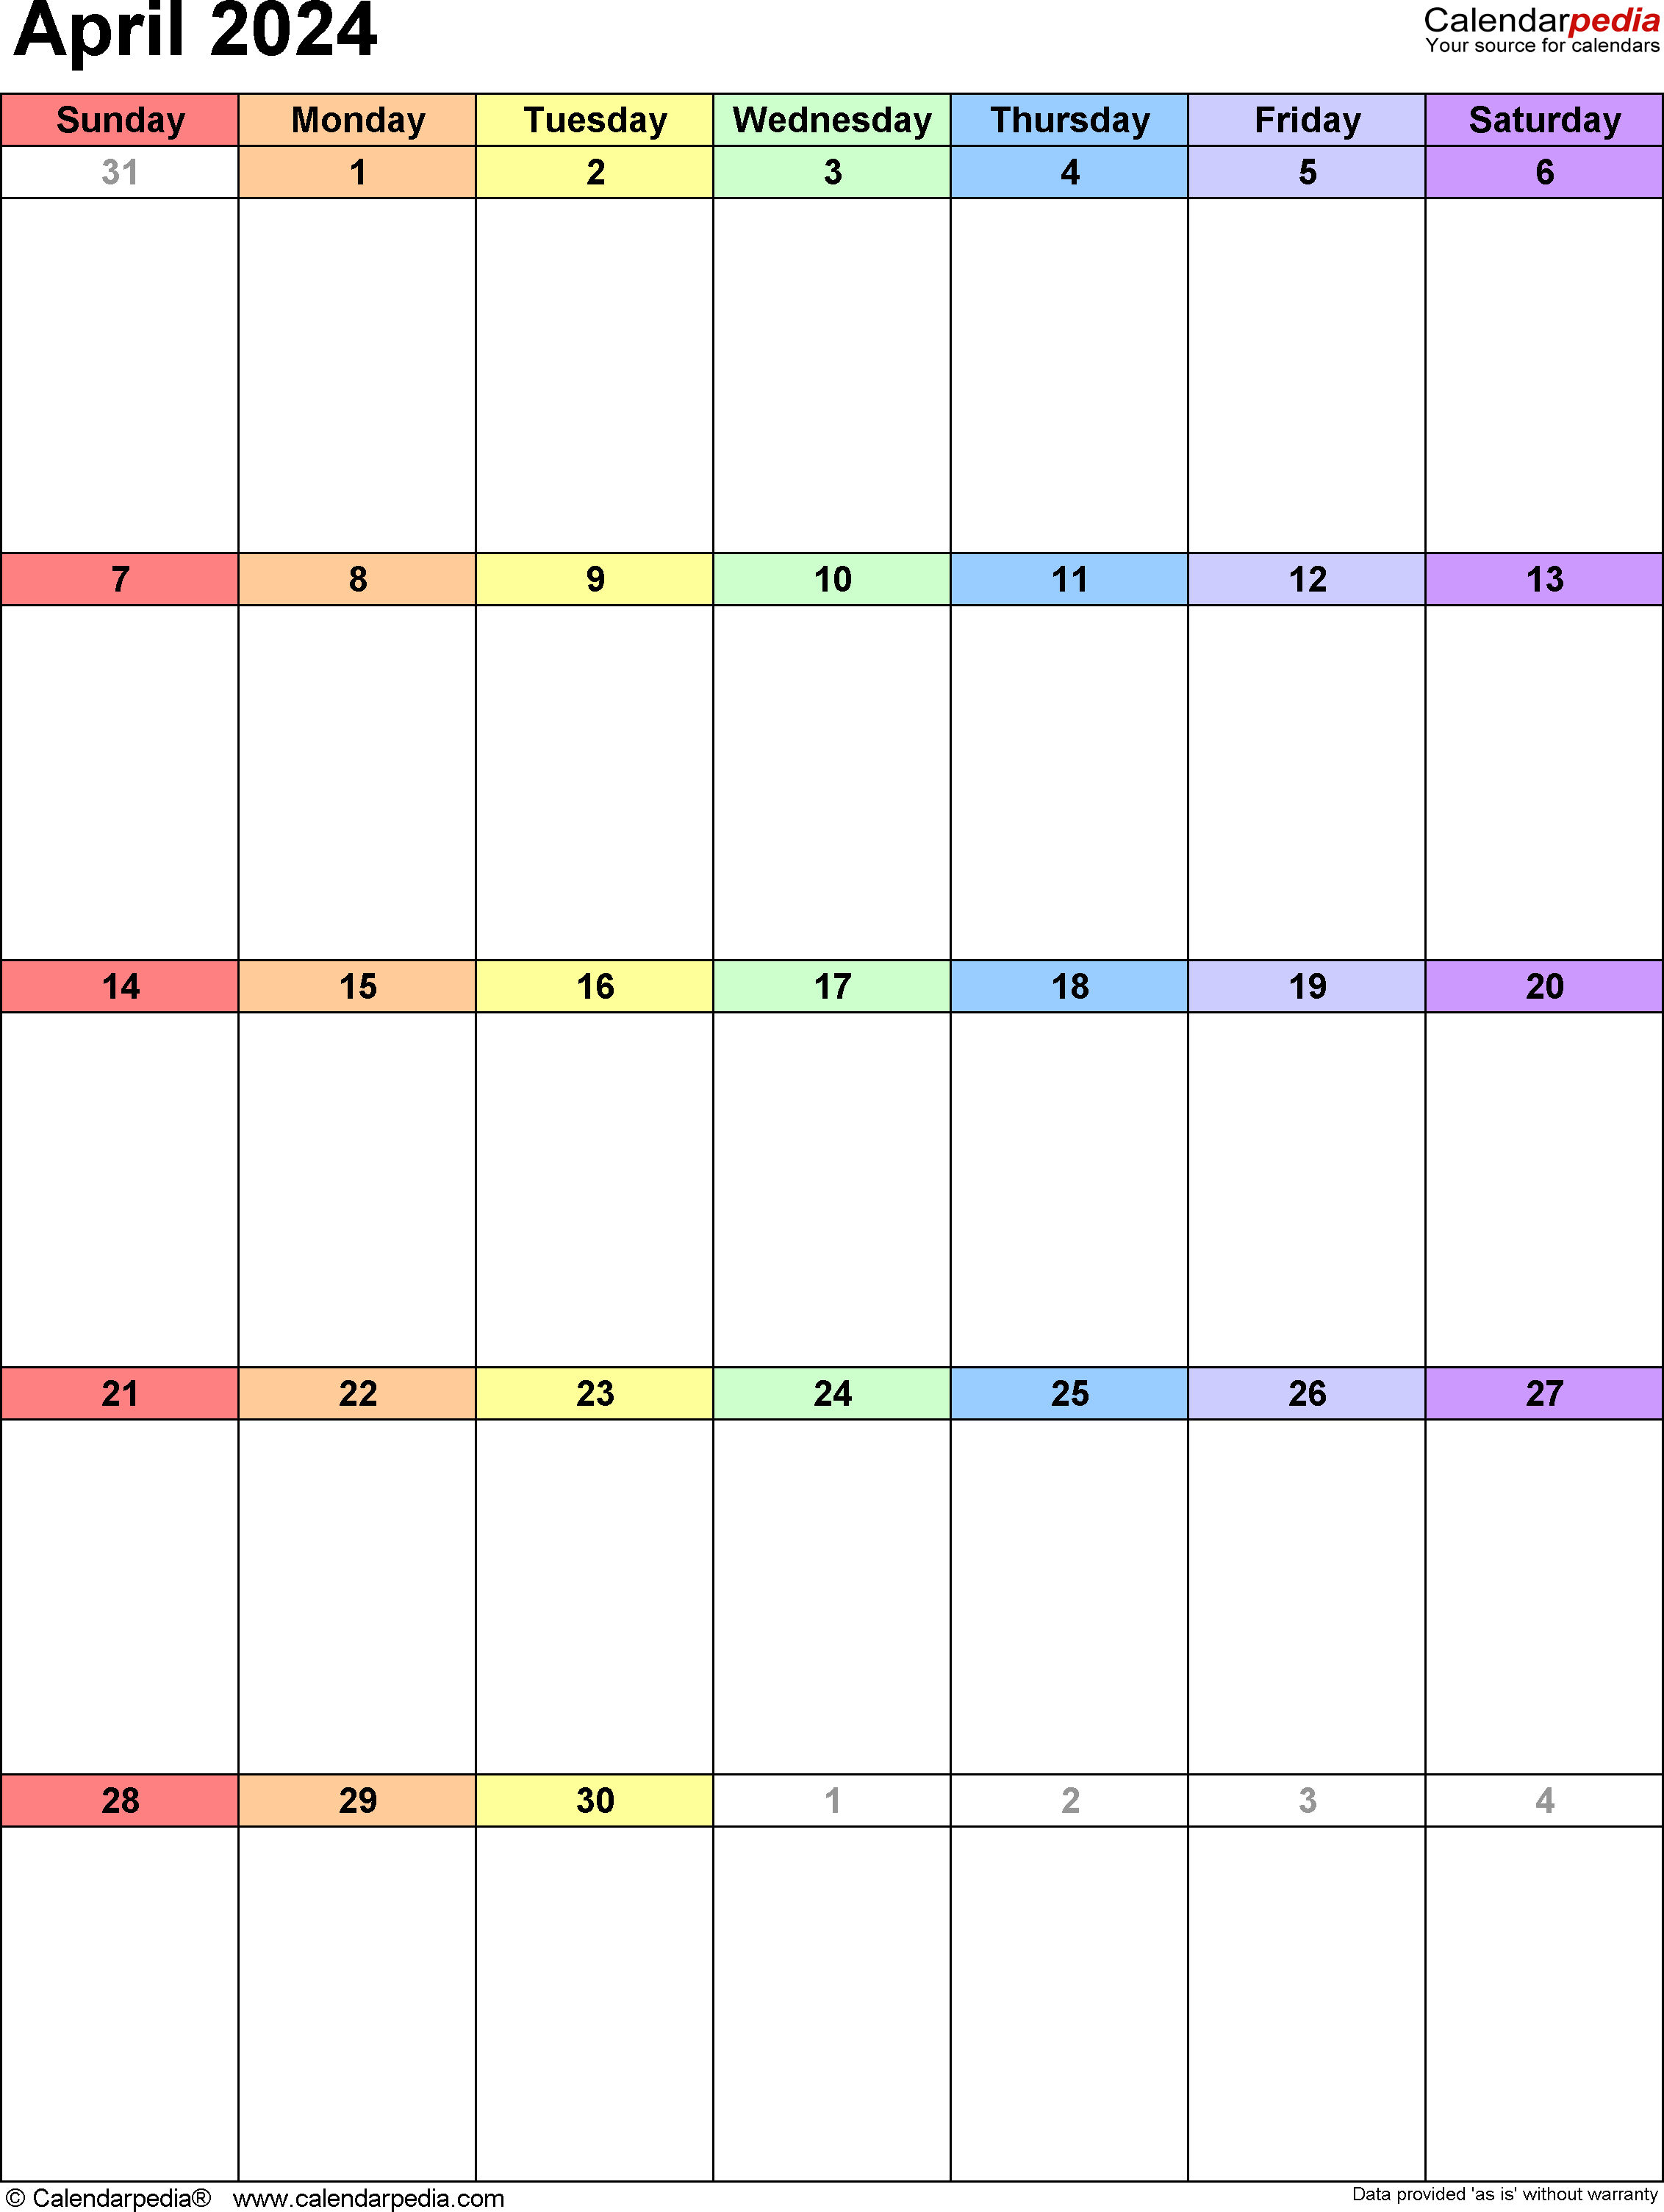 April 2024 Calendar | Templates For Word, Excel And Pdf throughout Editable April Calendar 2024